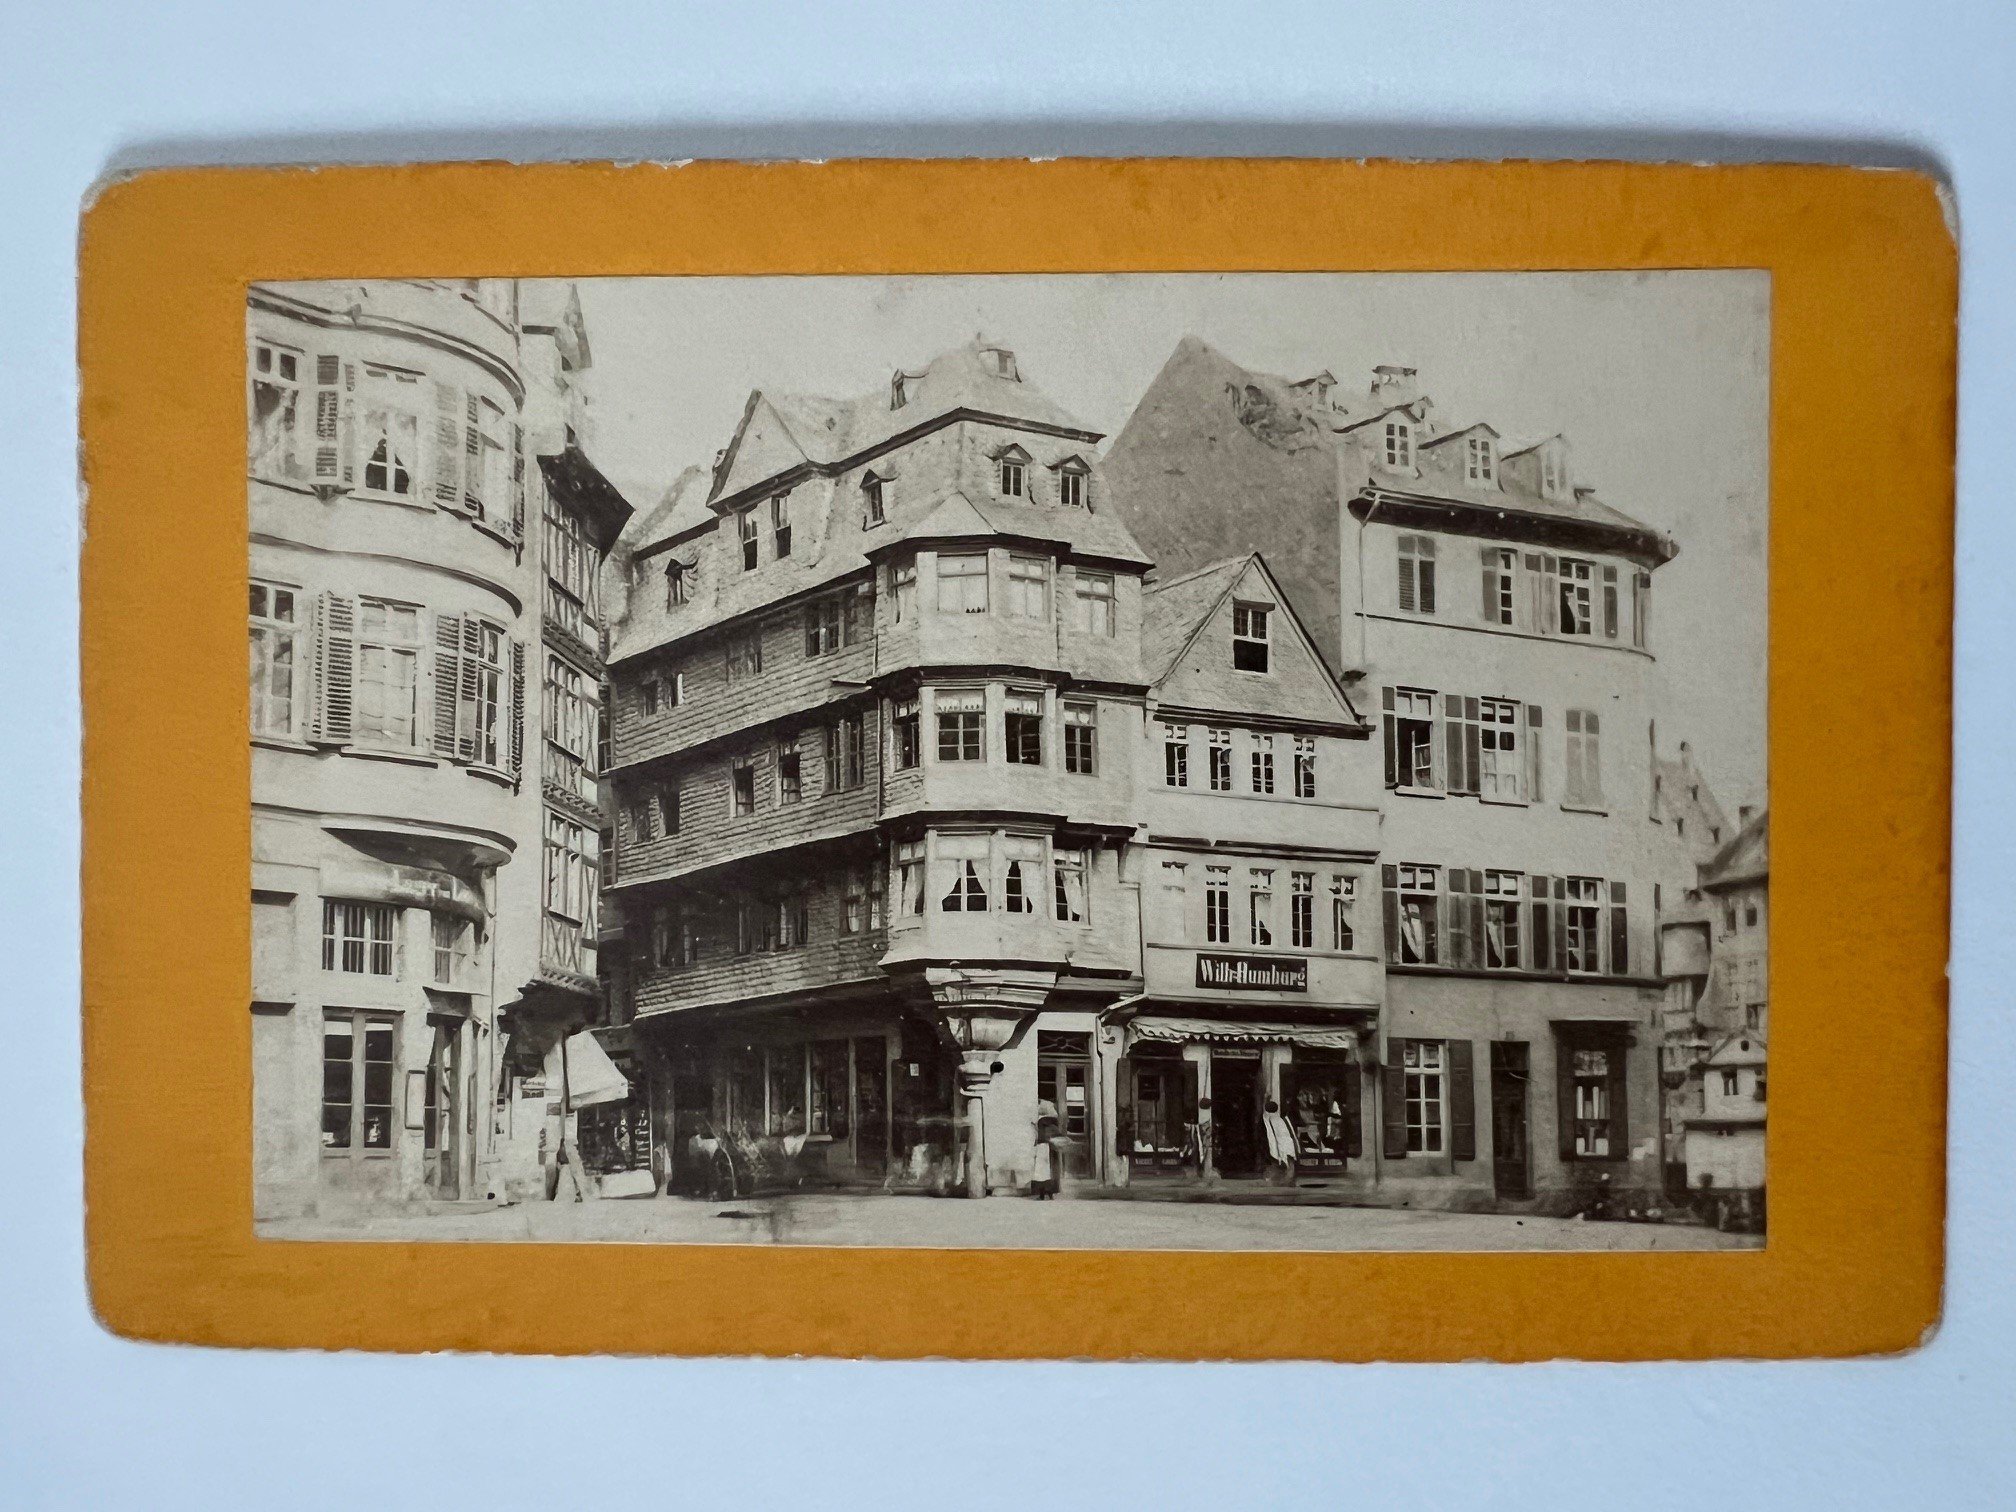 CdV, Theodor Creifelds, Frankfurt, Nr. 270, Luther-Haus, ca. 1872. (Taunus-Rhein-Main - Regionalgeschichtliche Sammlung Dr. Stefan Naas CC BY-NC-SA)